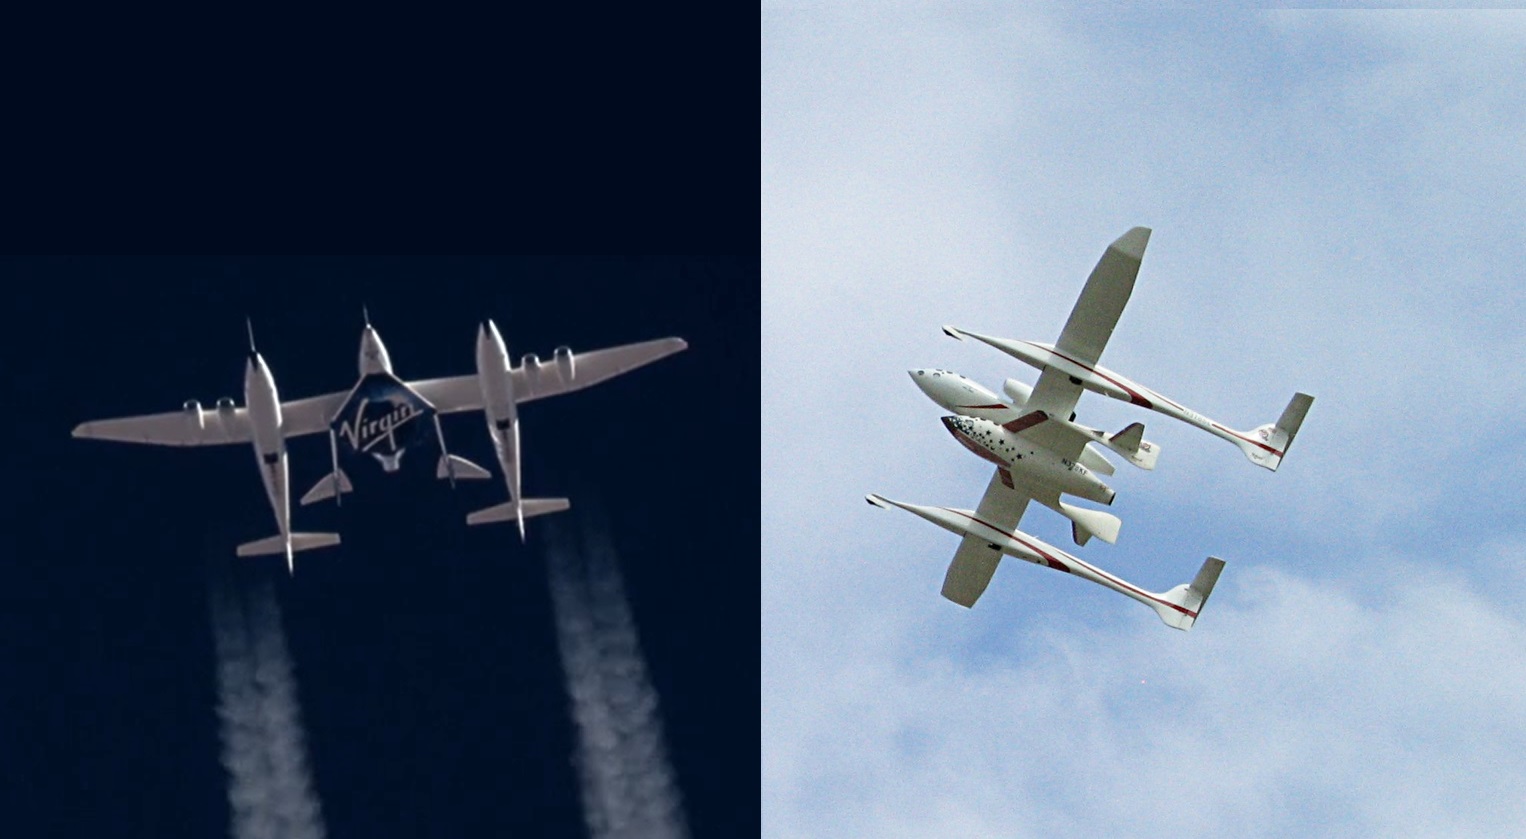 SpaceShipTwo / SpaceShipOne